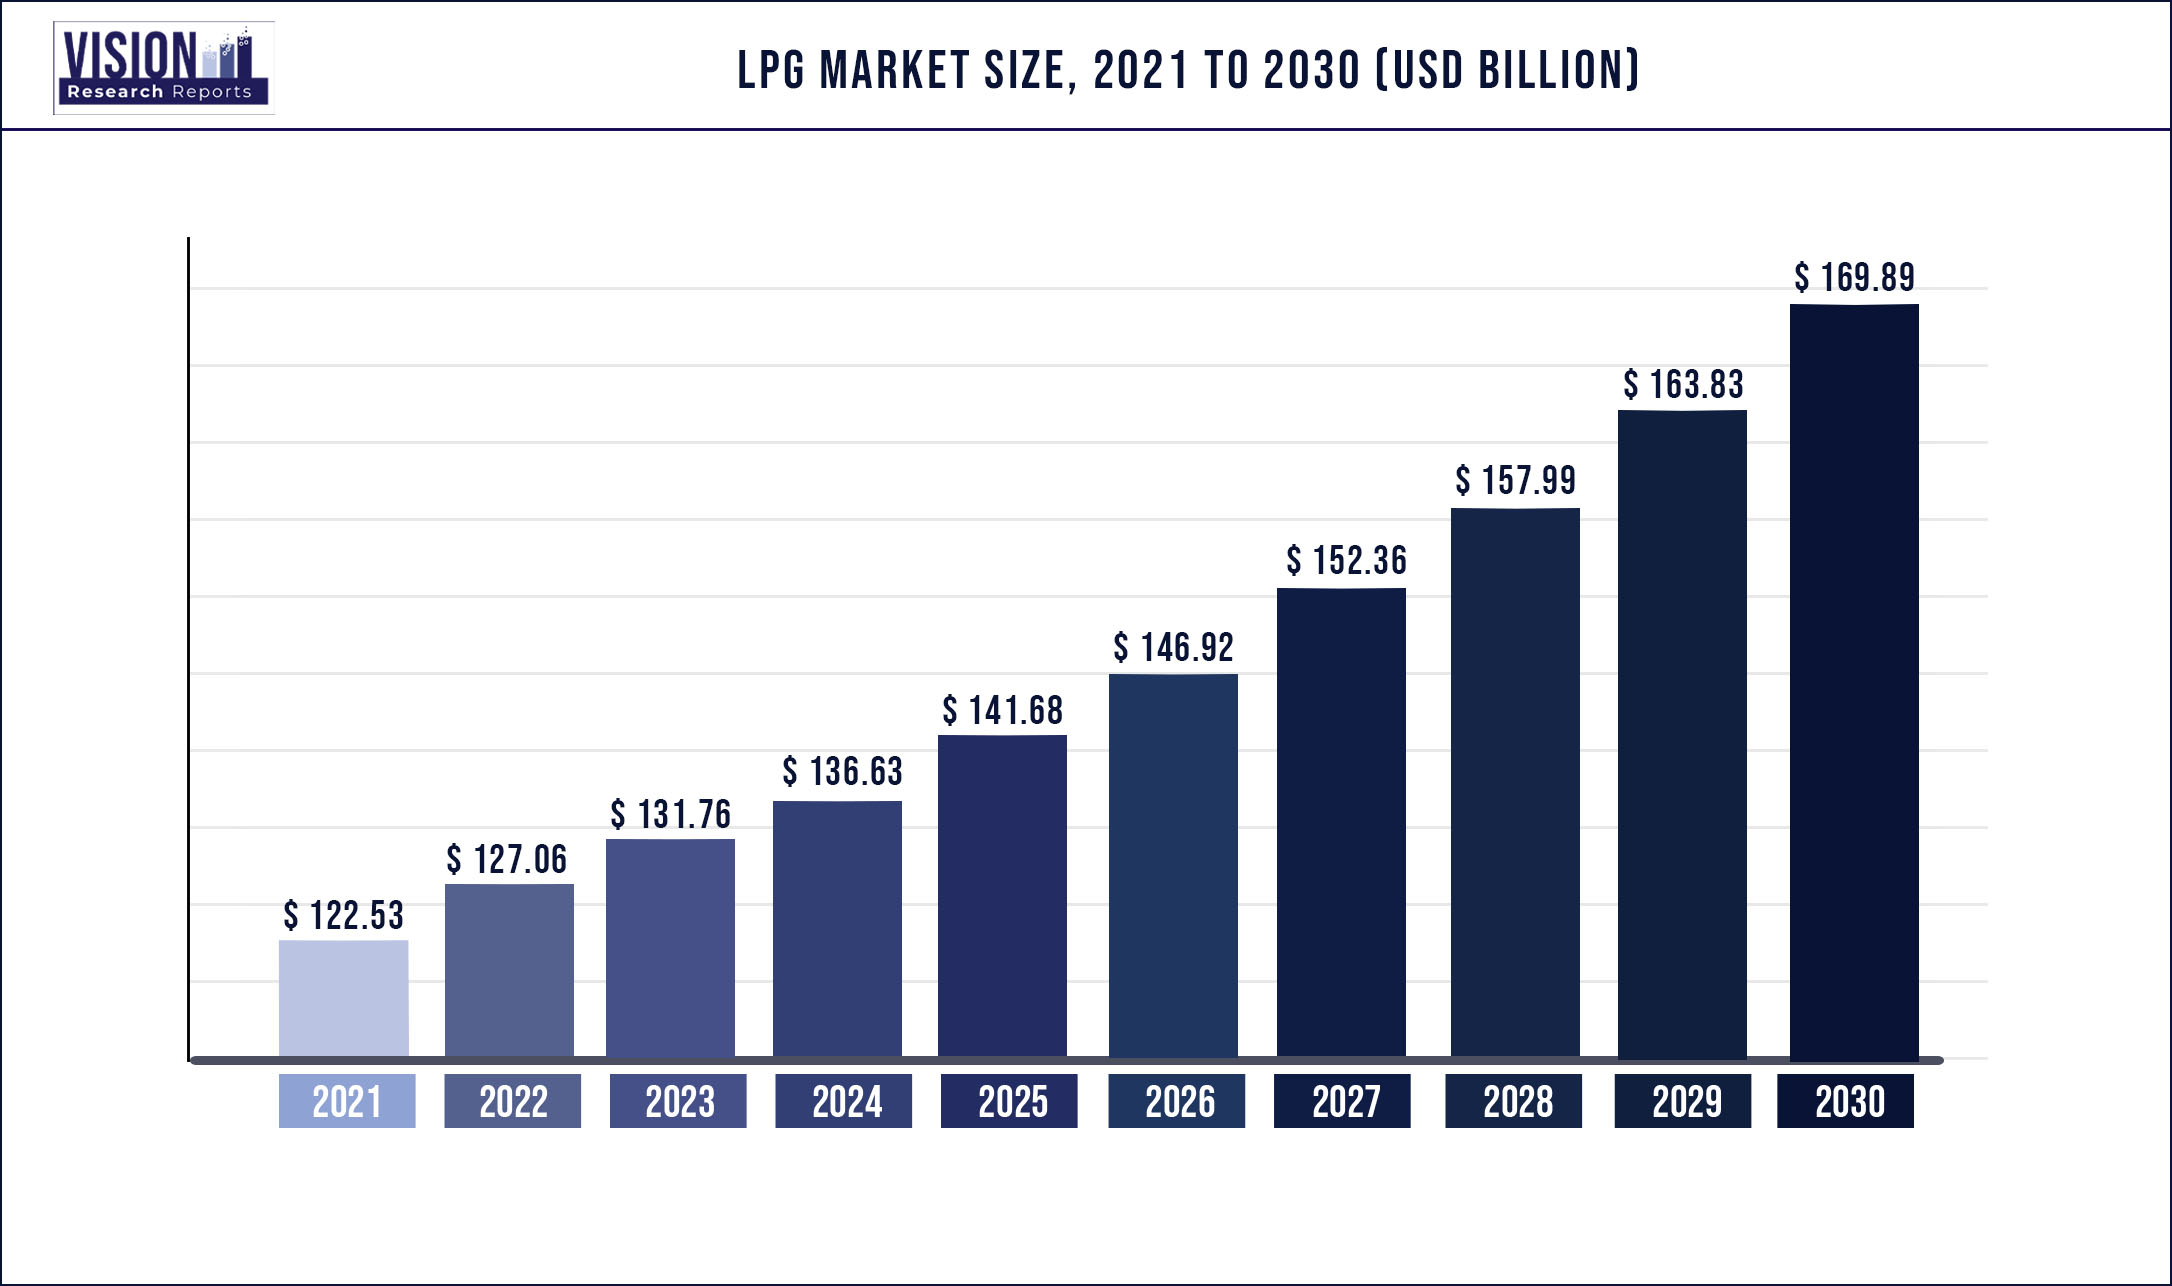 LPG Market Size 2021 to 2030